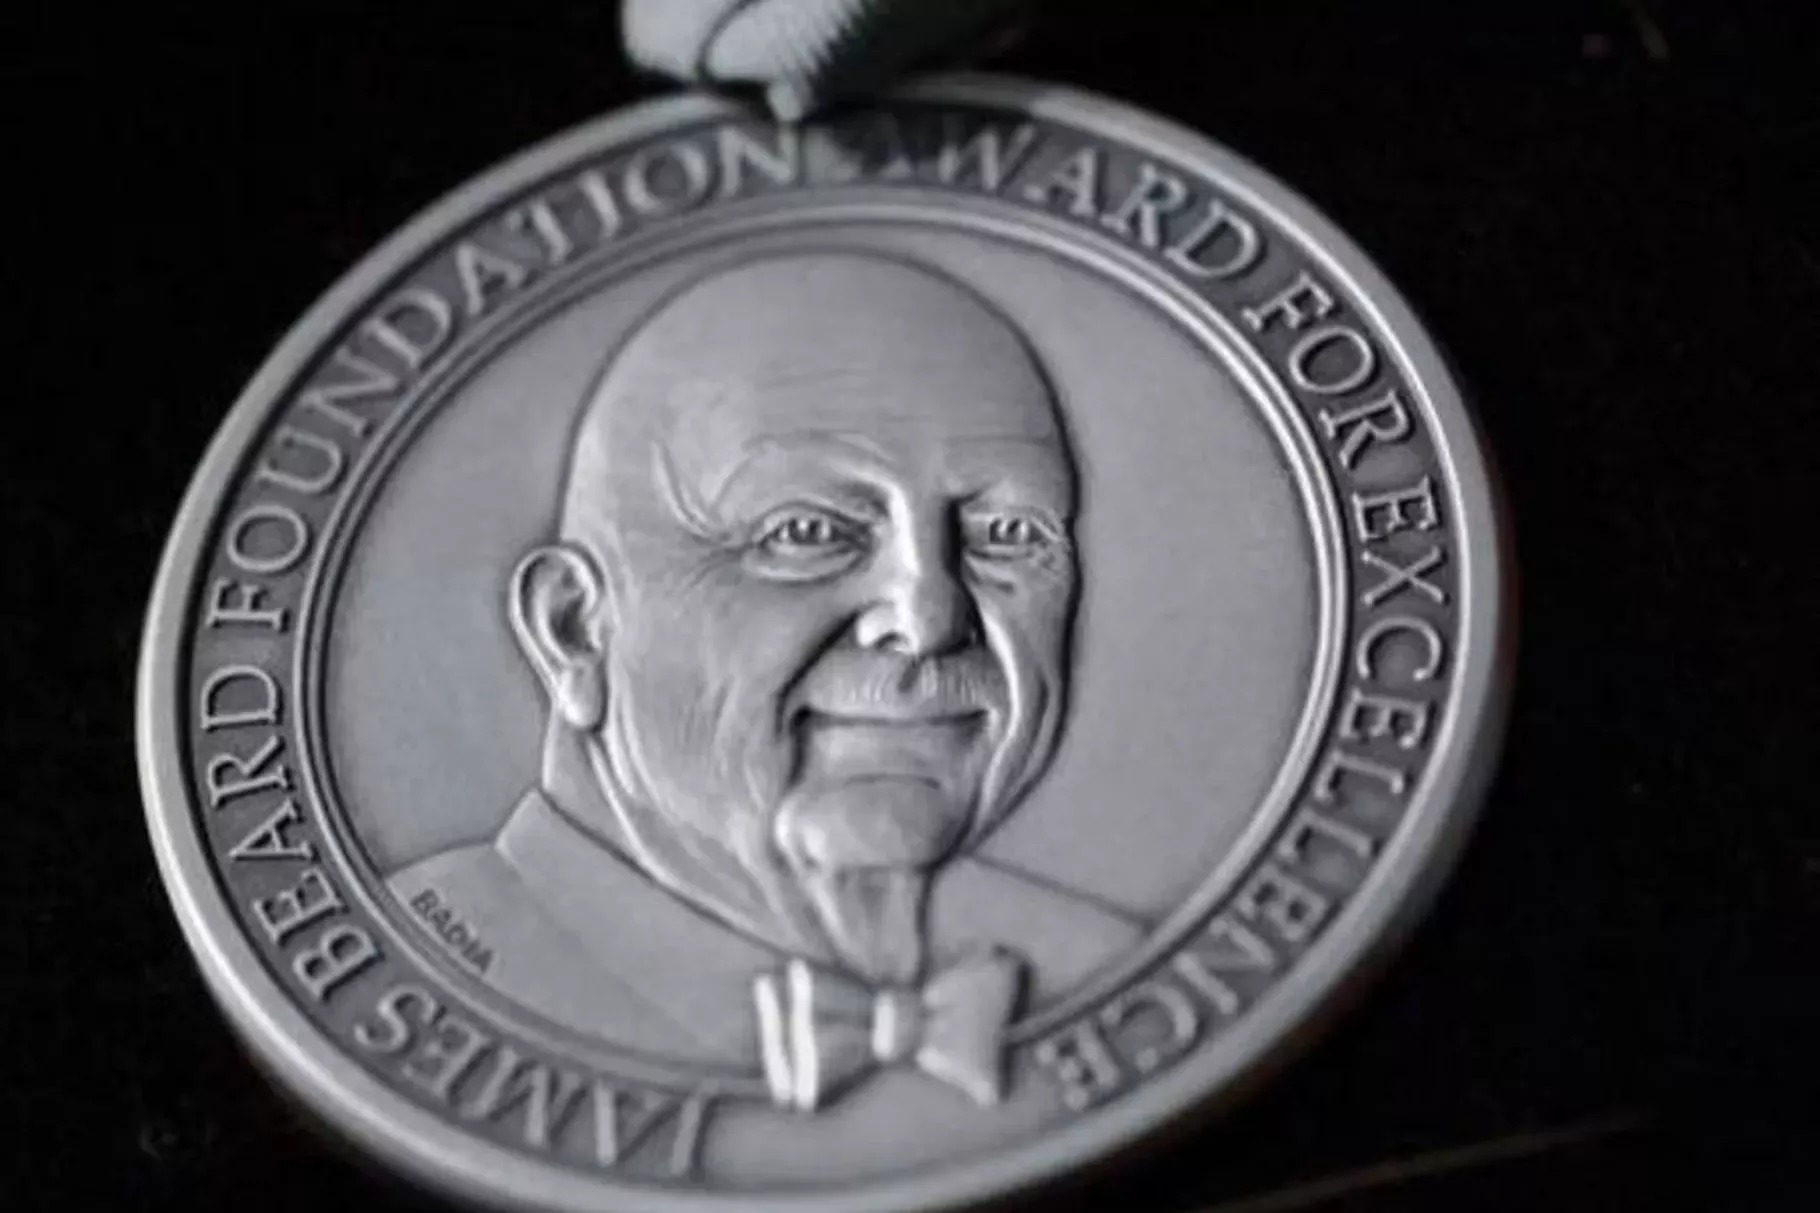 A silver James Beard Awards medal on a black background.